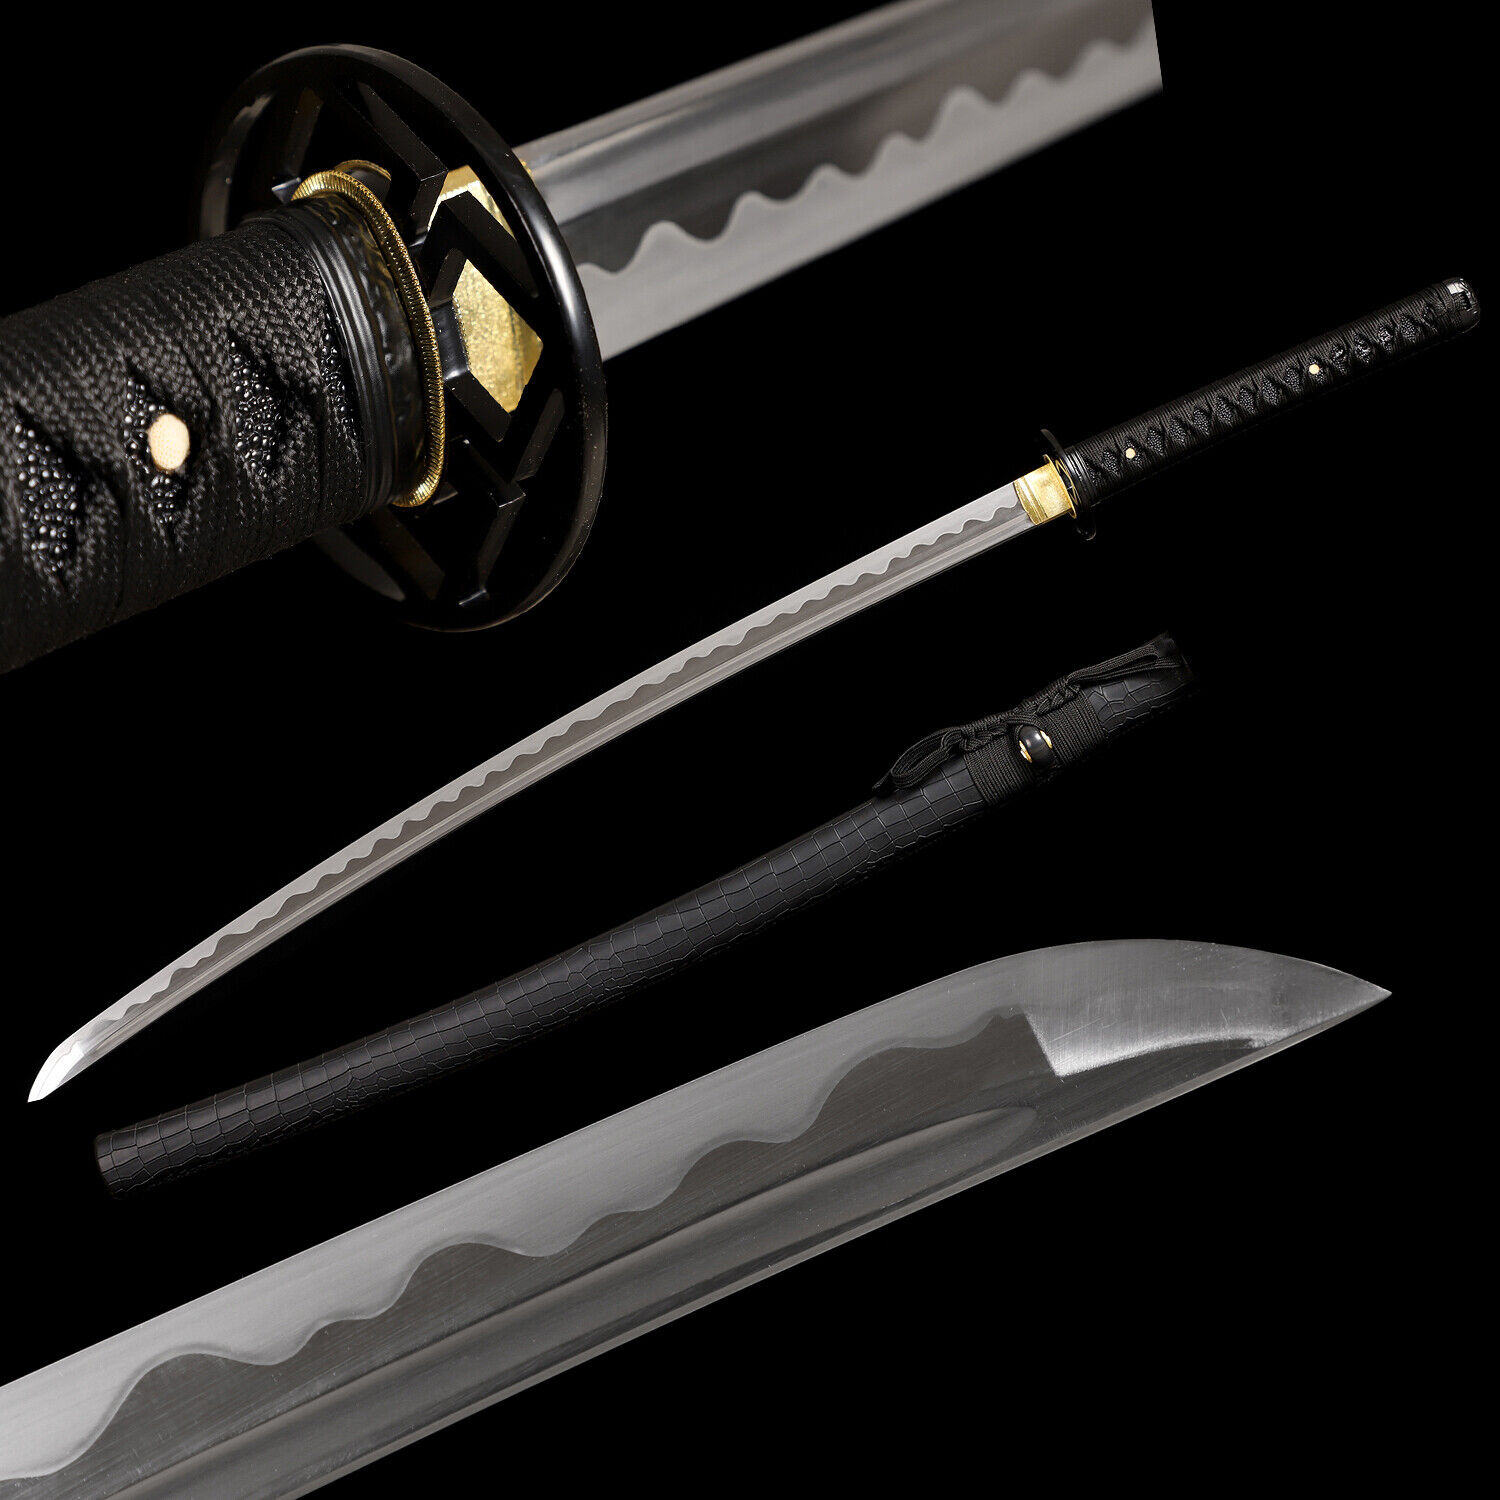 Black Katana 1095 Carbon Steel Japanese Razor Sharp Samurai Sword Full Tang